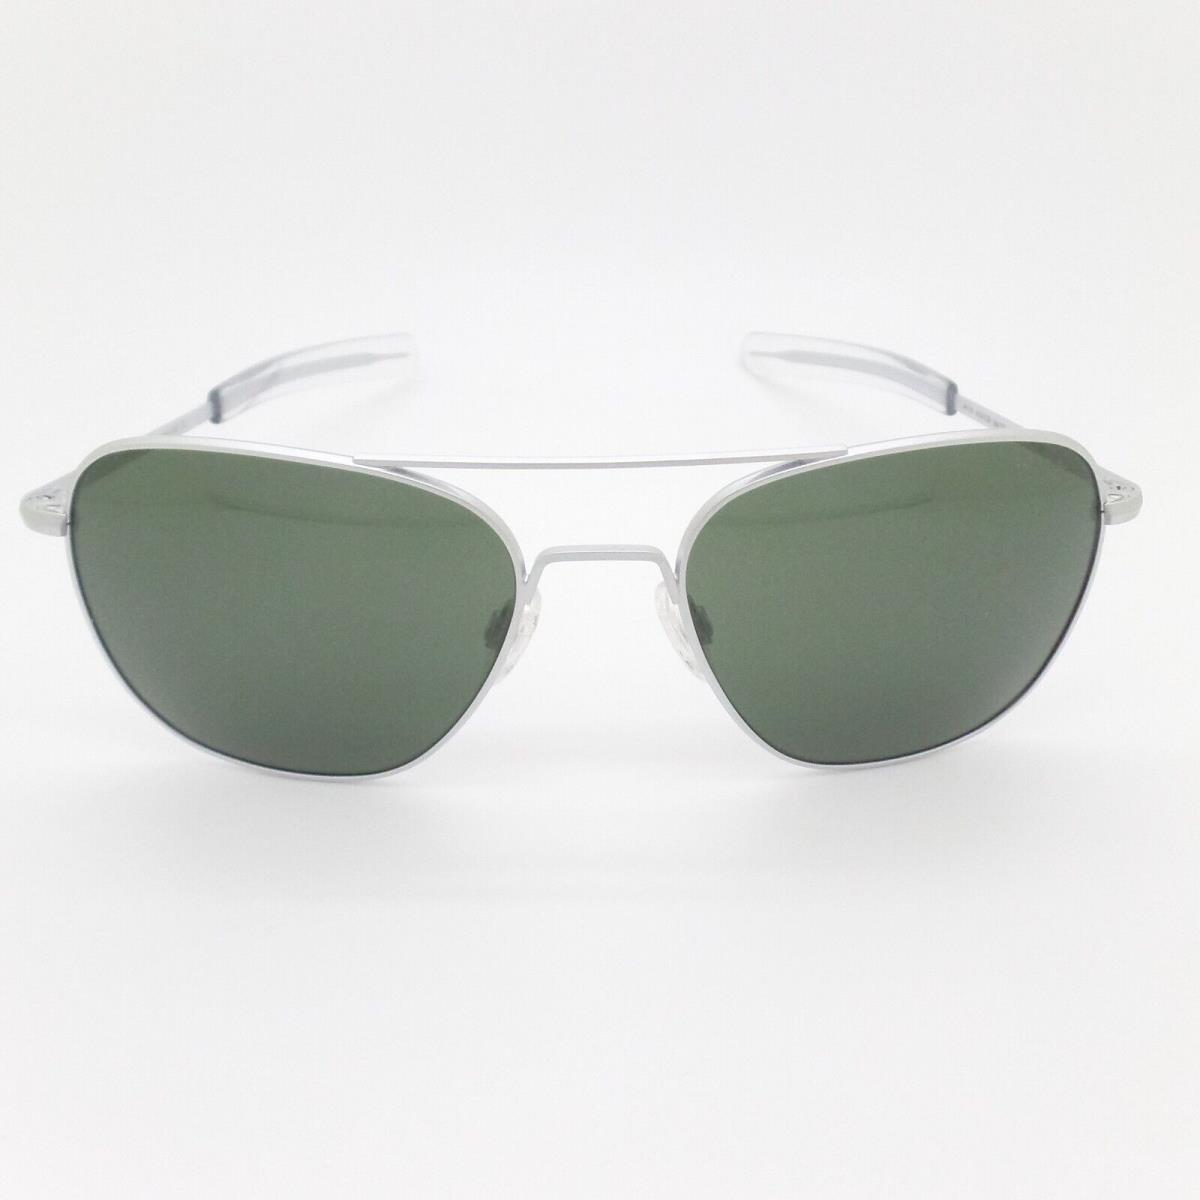 Randolph sunglasses Aviator - Matte Chrome Frame, AGX Green Lens 1